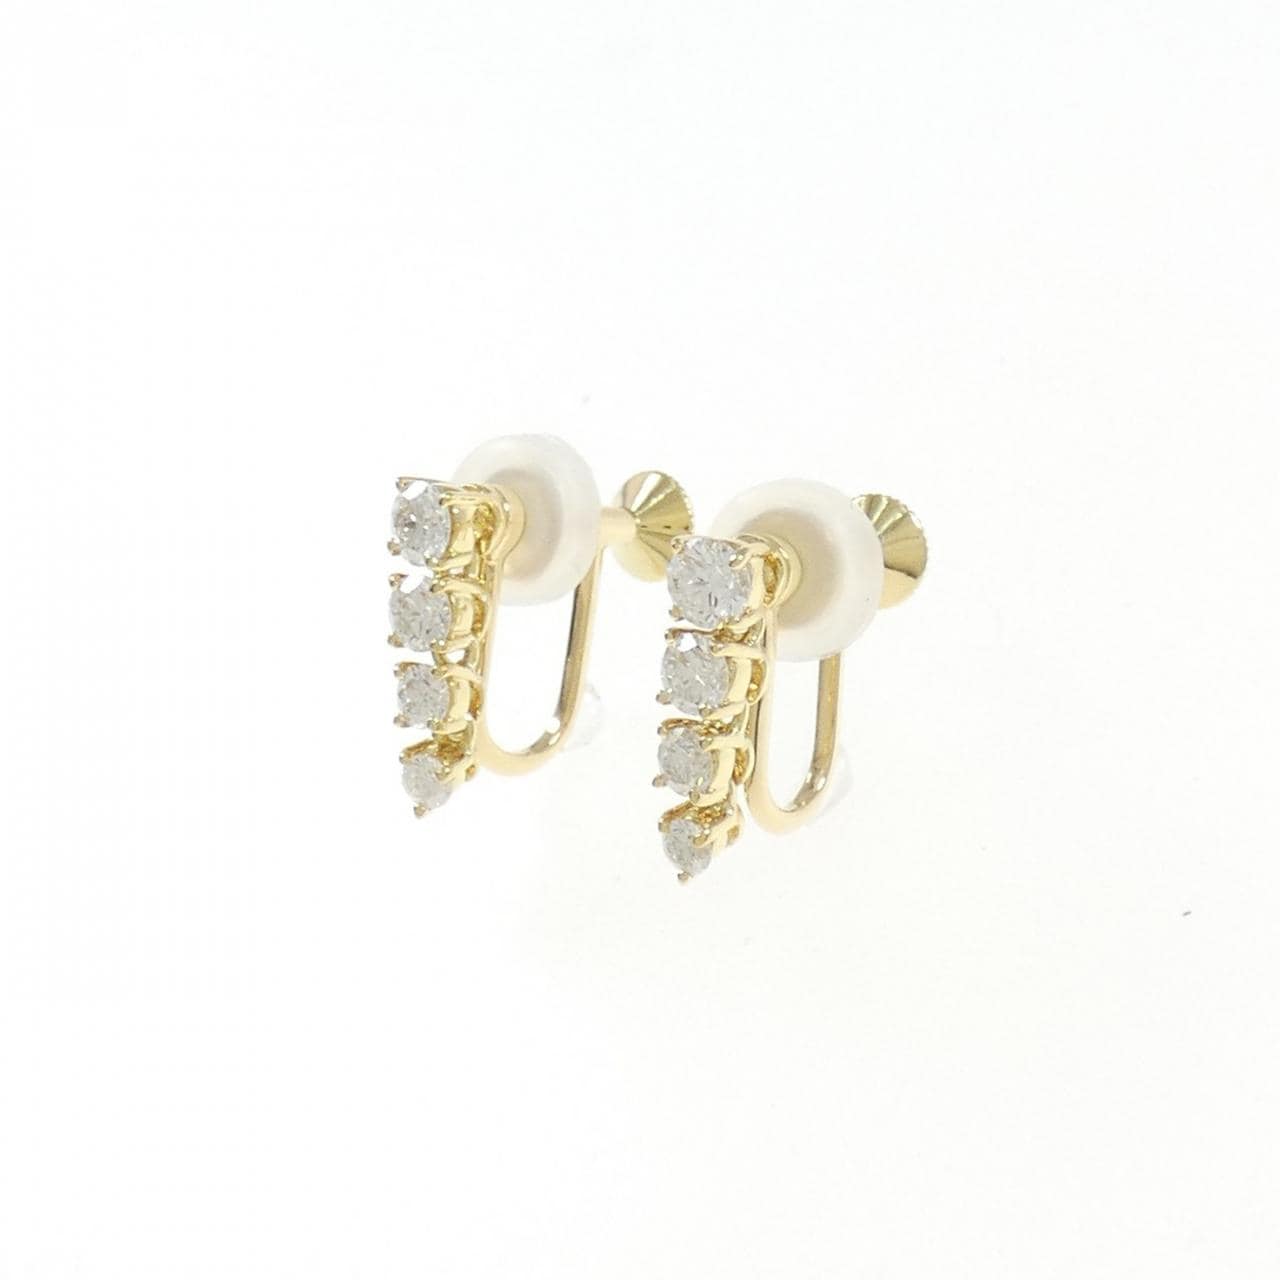 MIKIMOTO Diamond earrings 0.70CT